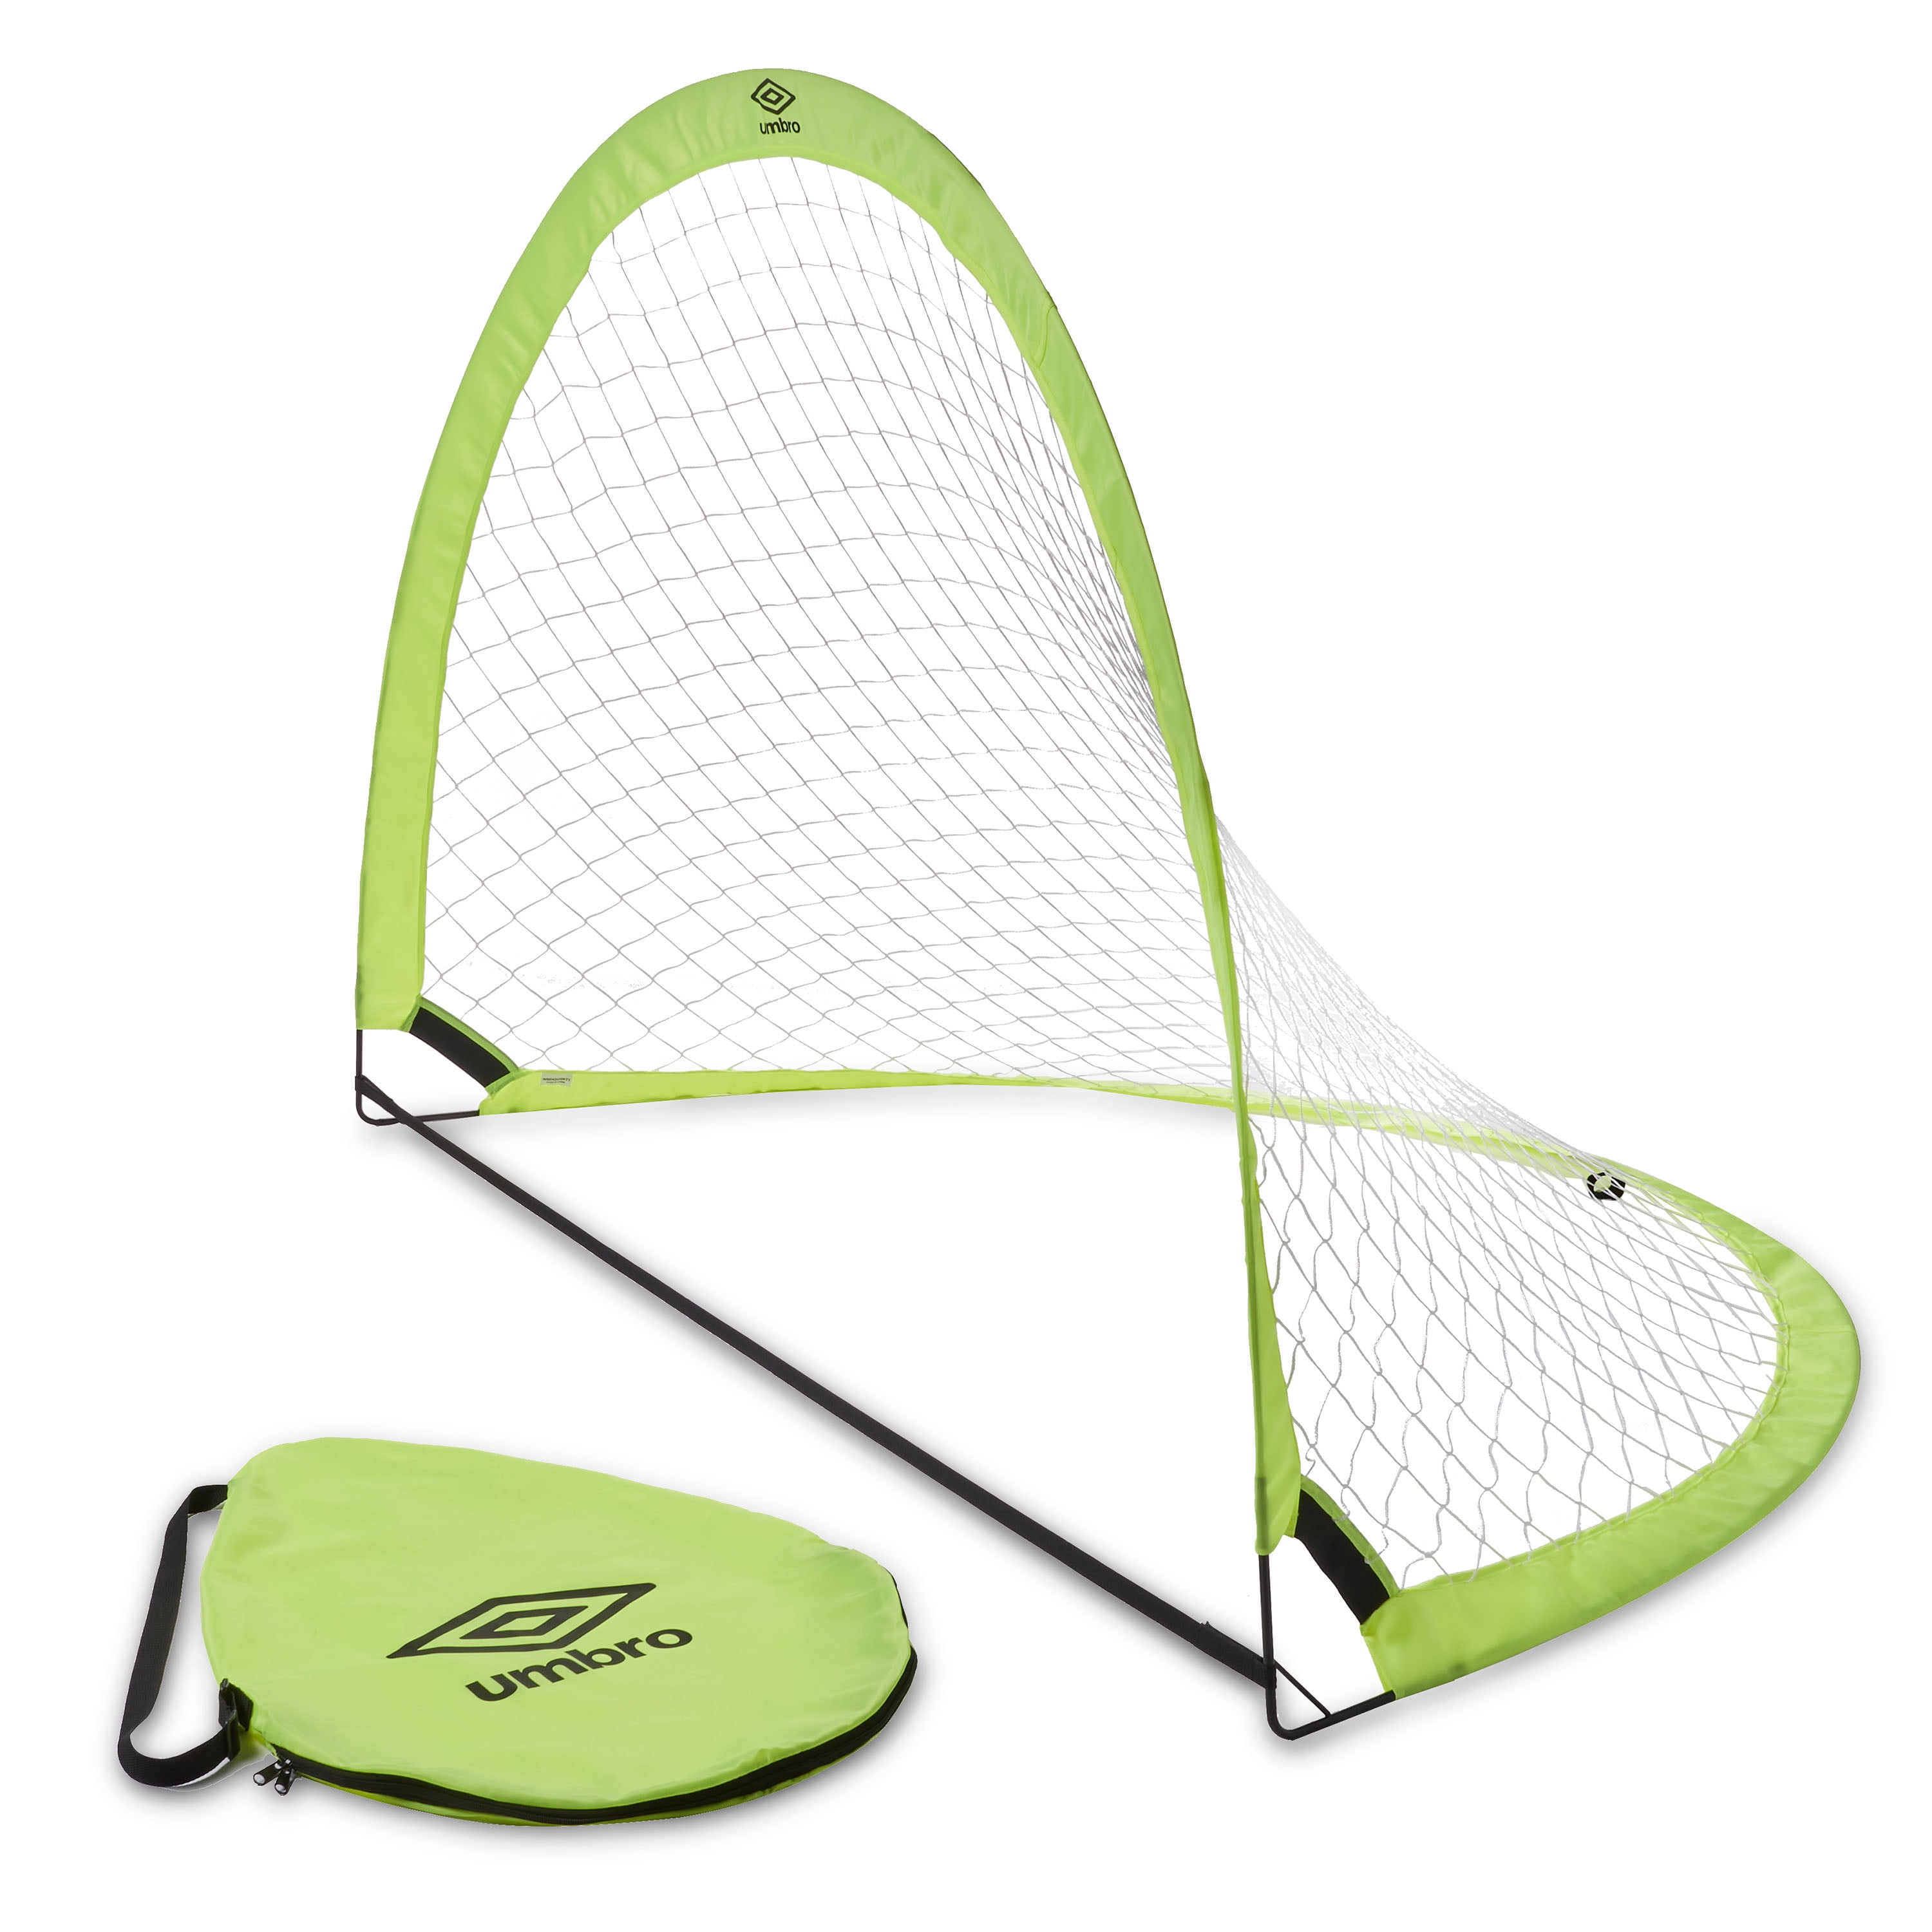 Umbro Soccer Goal Nets, Portable Pop-up Set with Lime Green Zipper Storage Bag